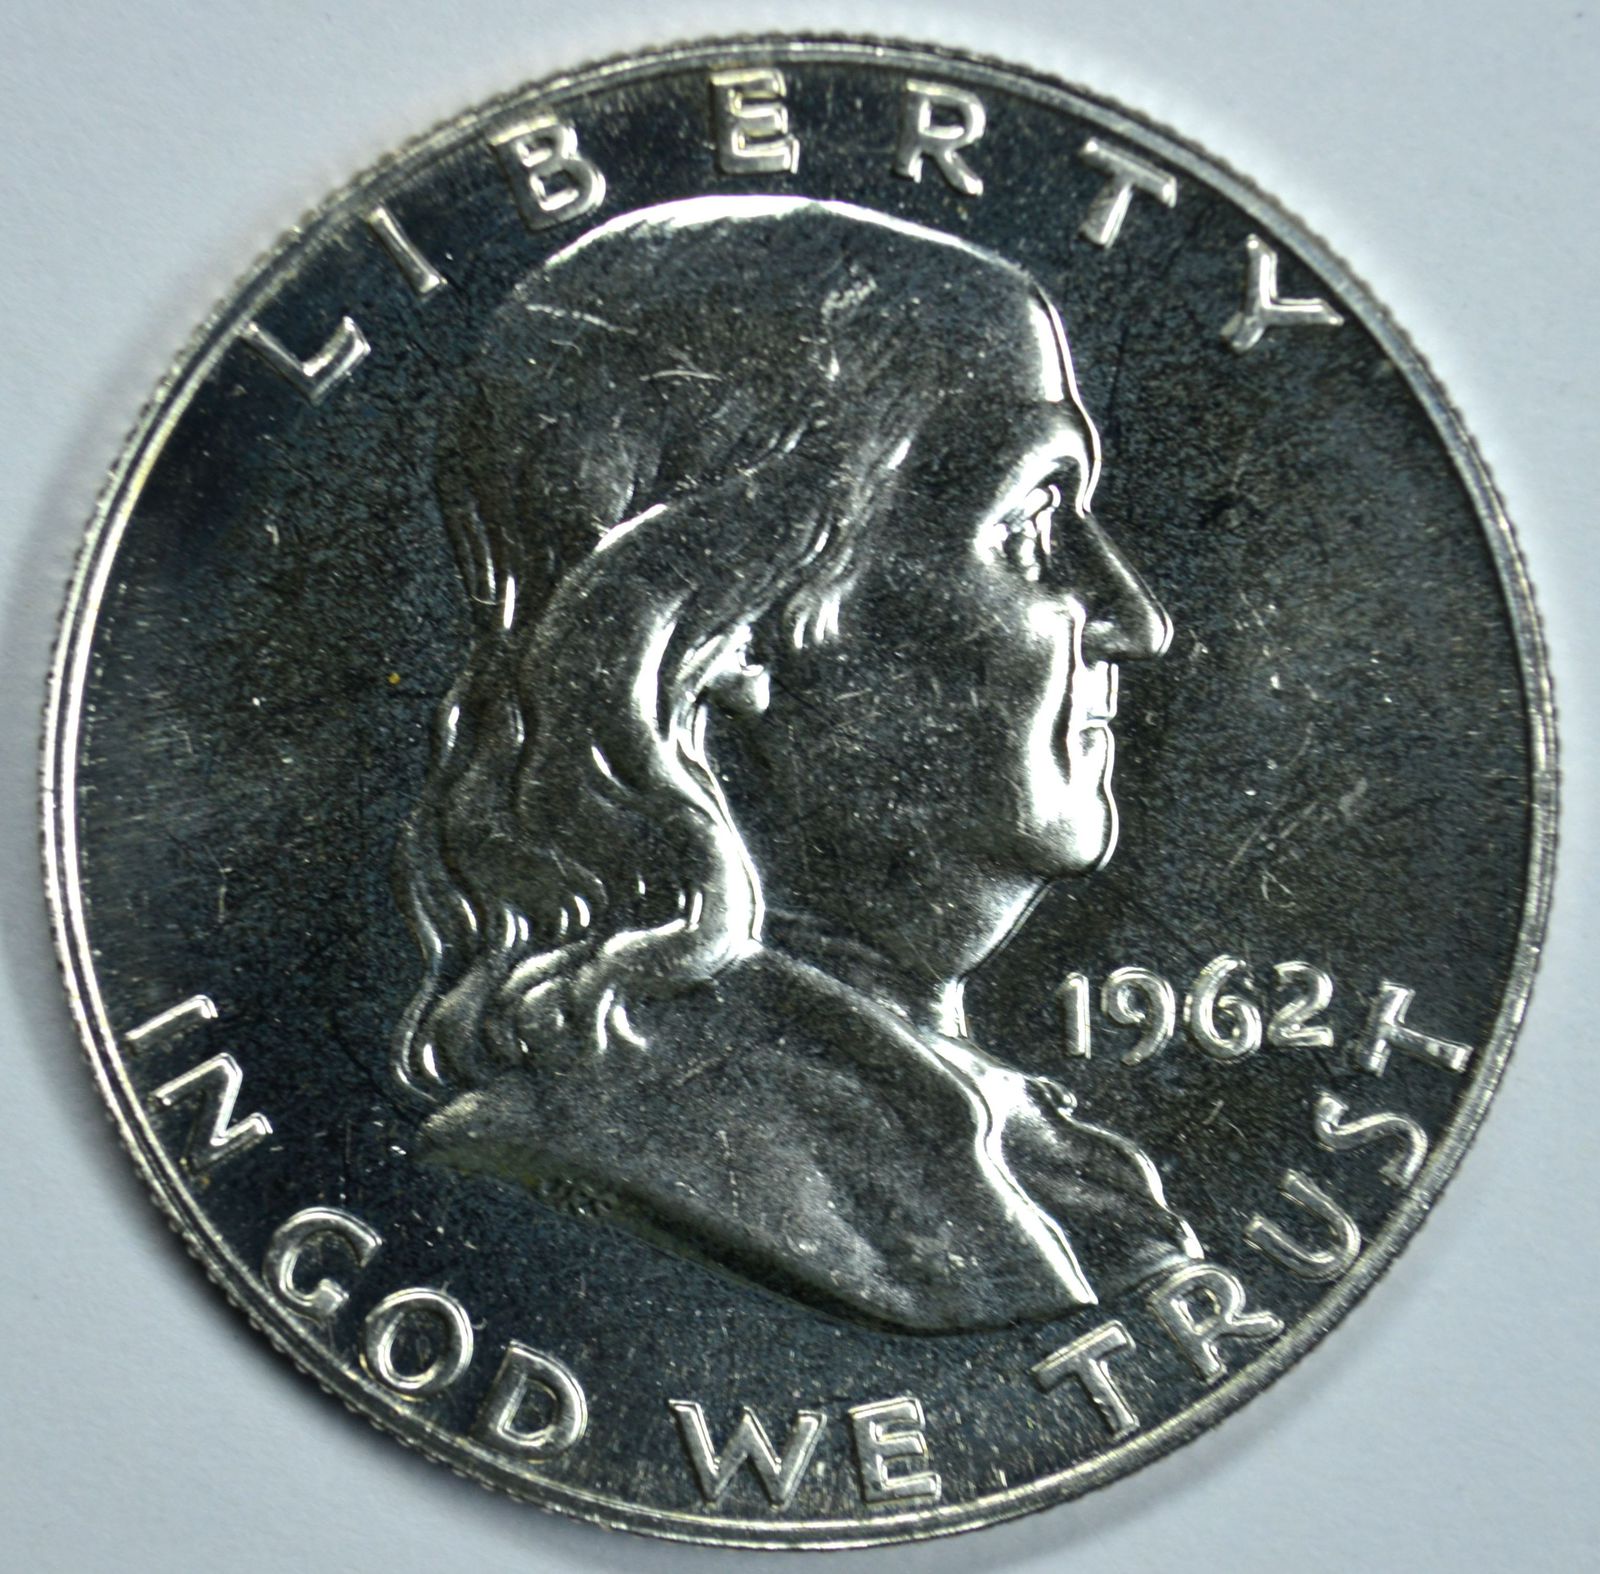 1962 Franklin silver proof half dollar - $22.00